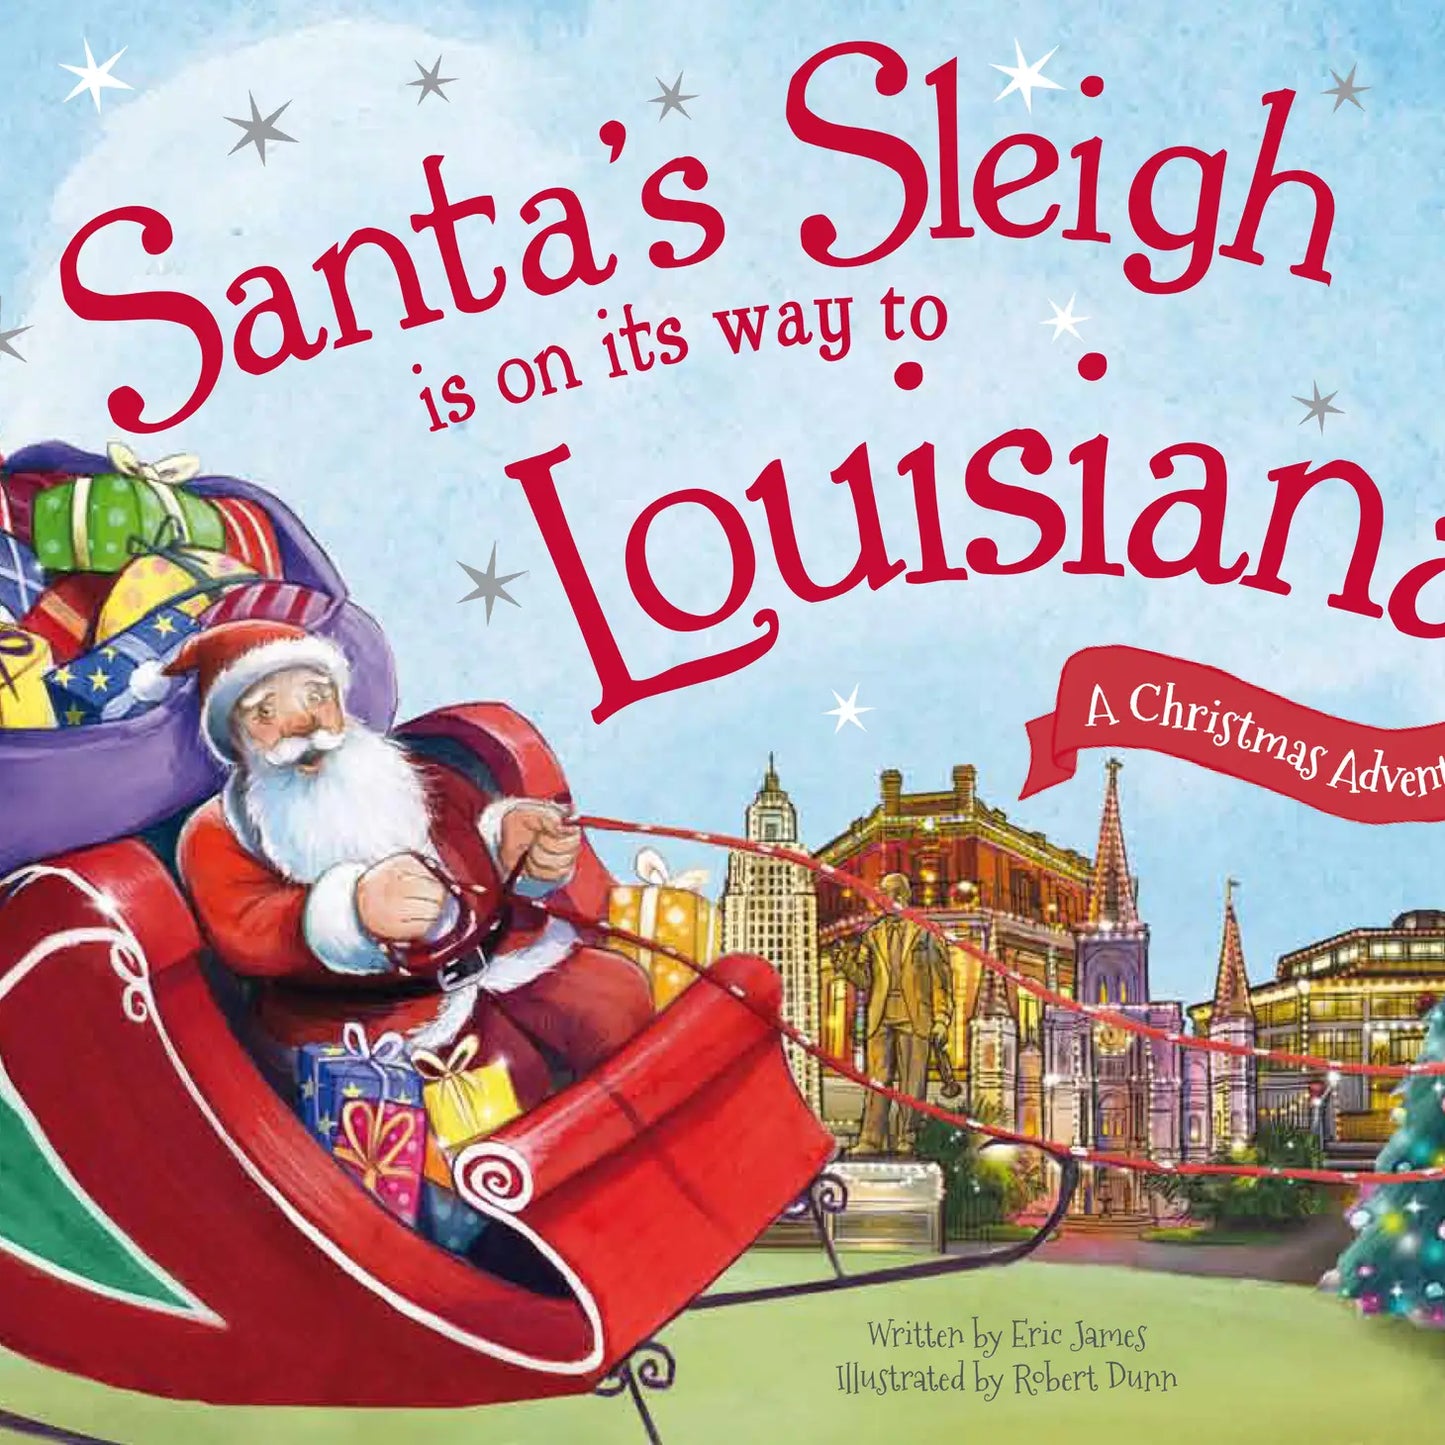 Santa’s Sleigh is on its way to Louisiana